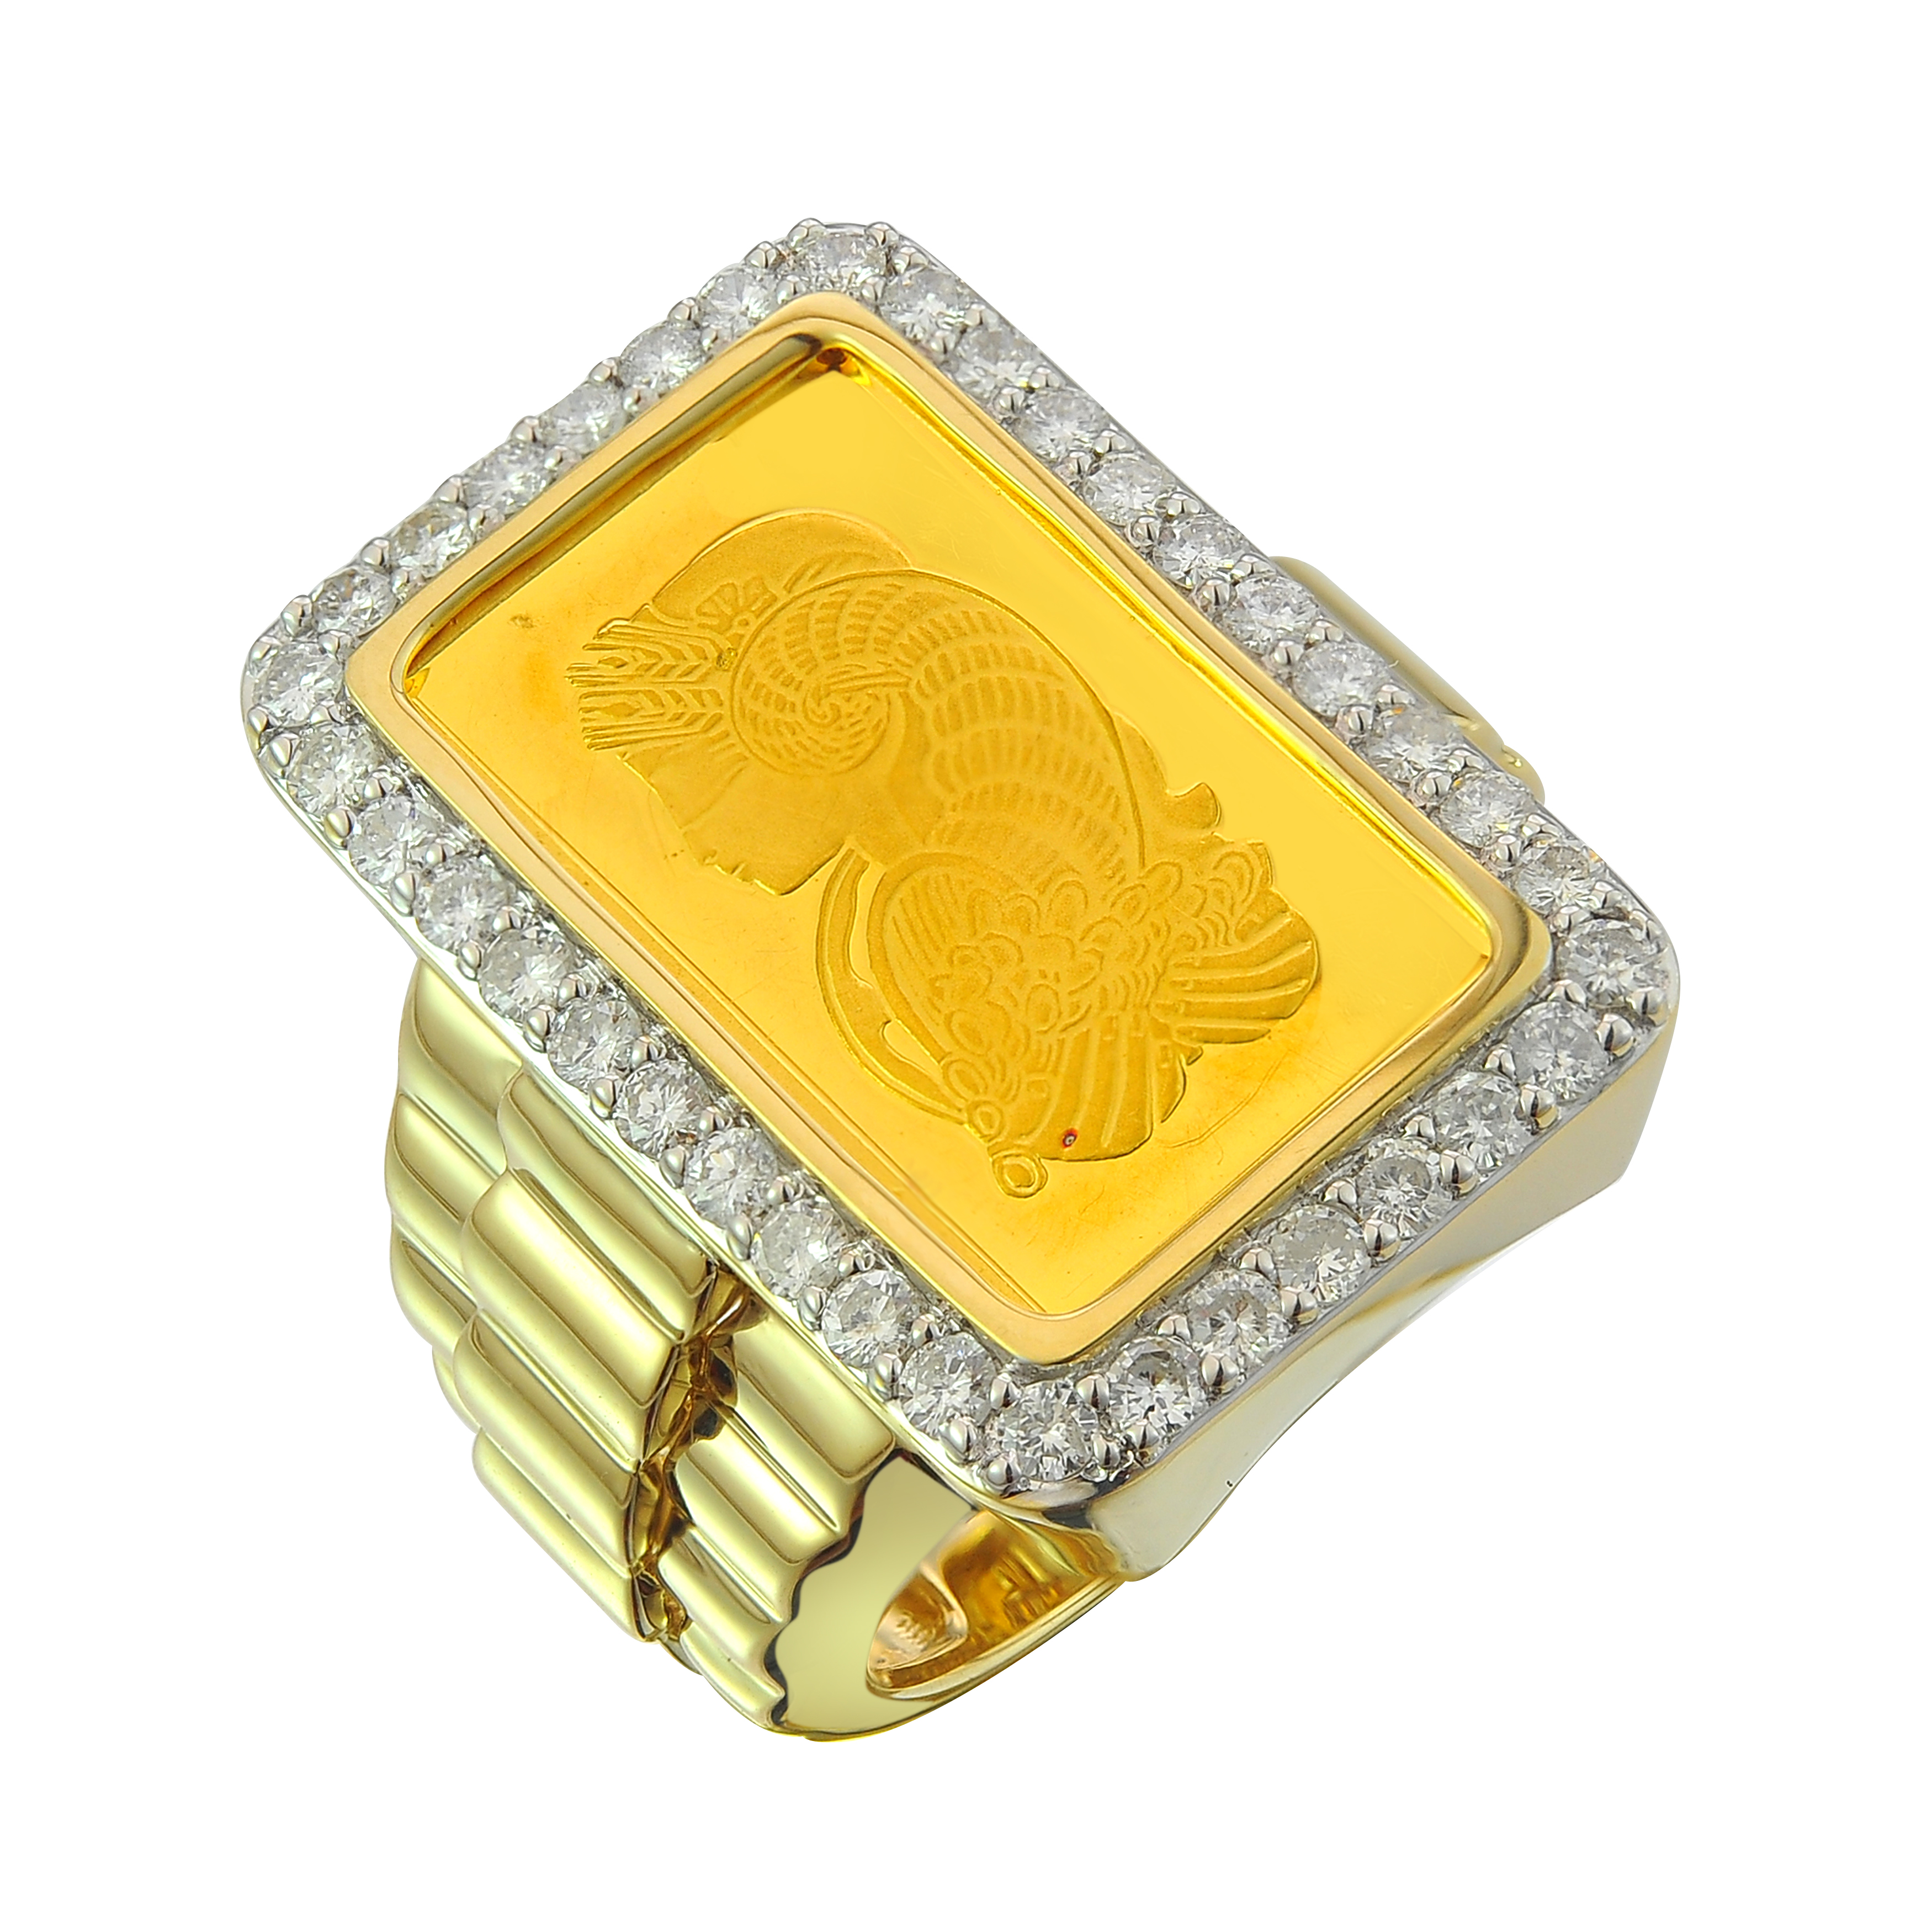 Diamond Ring 1.16 ct. 10K Yellow Gold 17.28g 5g Suisse